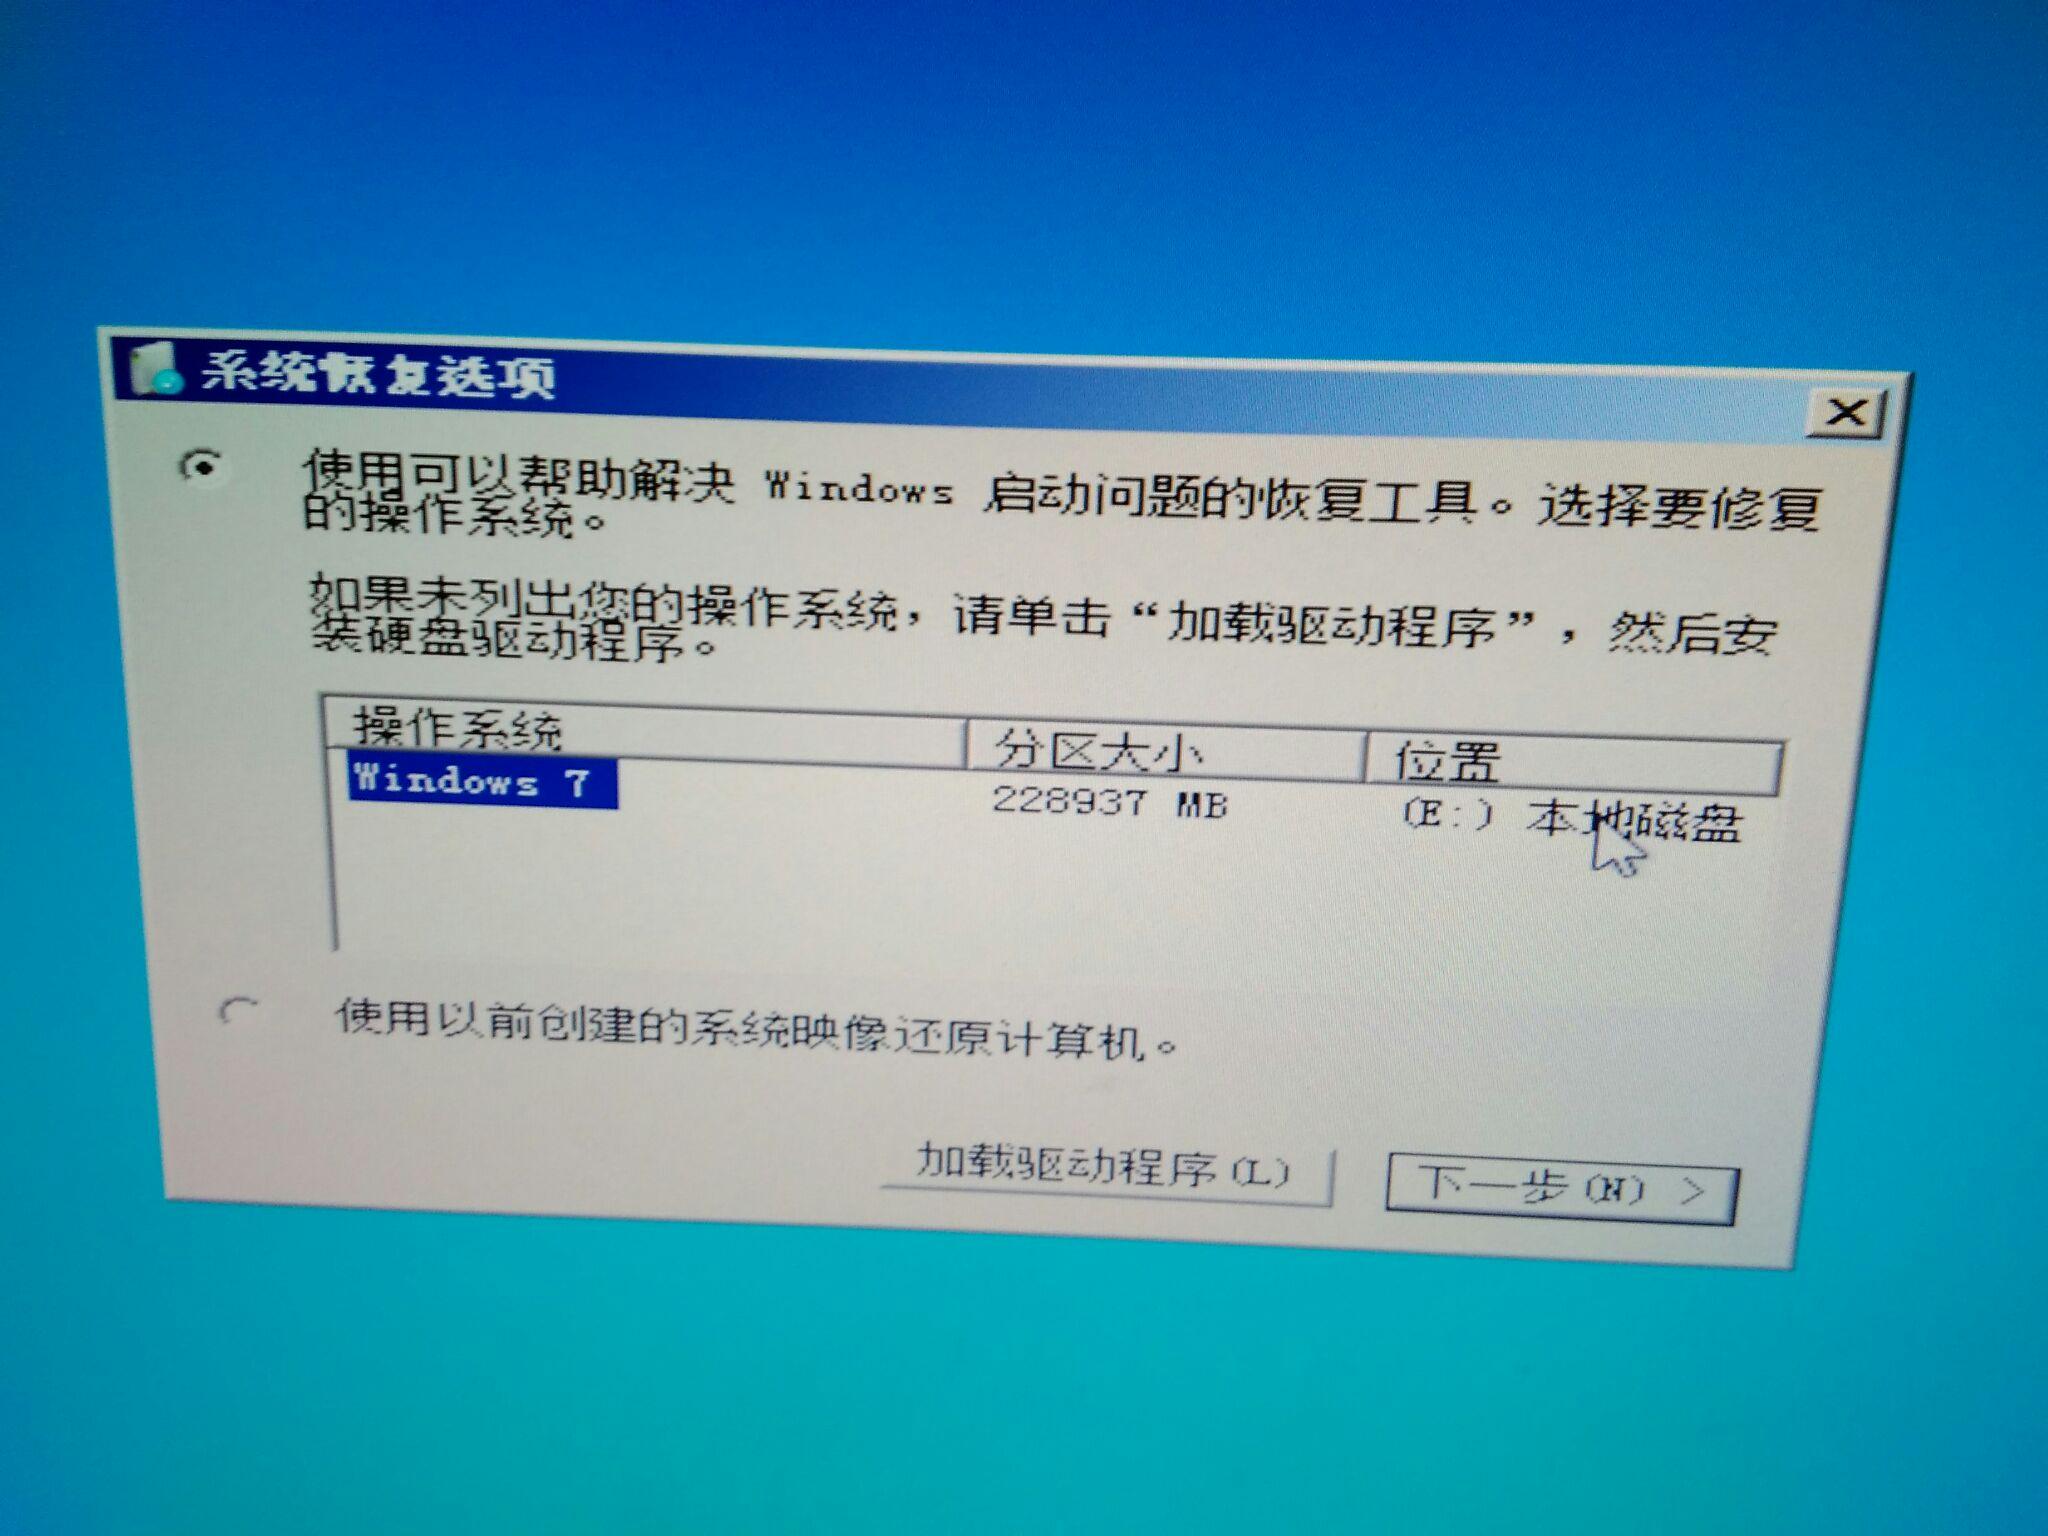 Windows7旗舰版开机密码忘记了,后面怎么办?